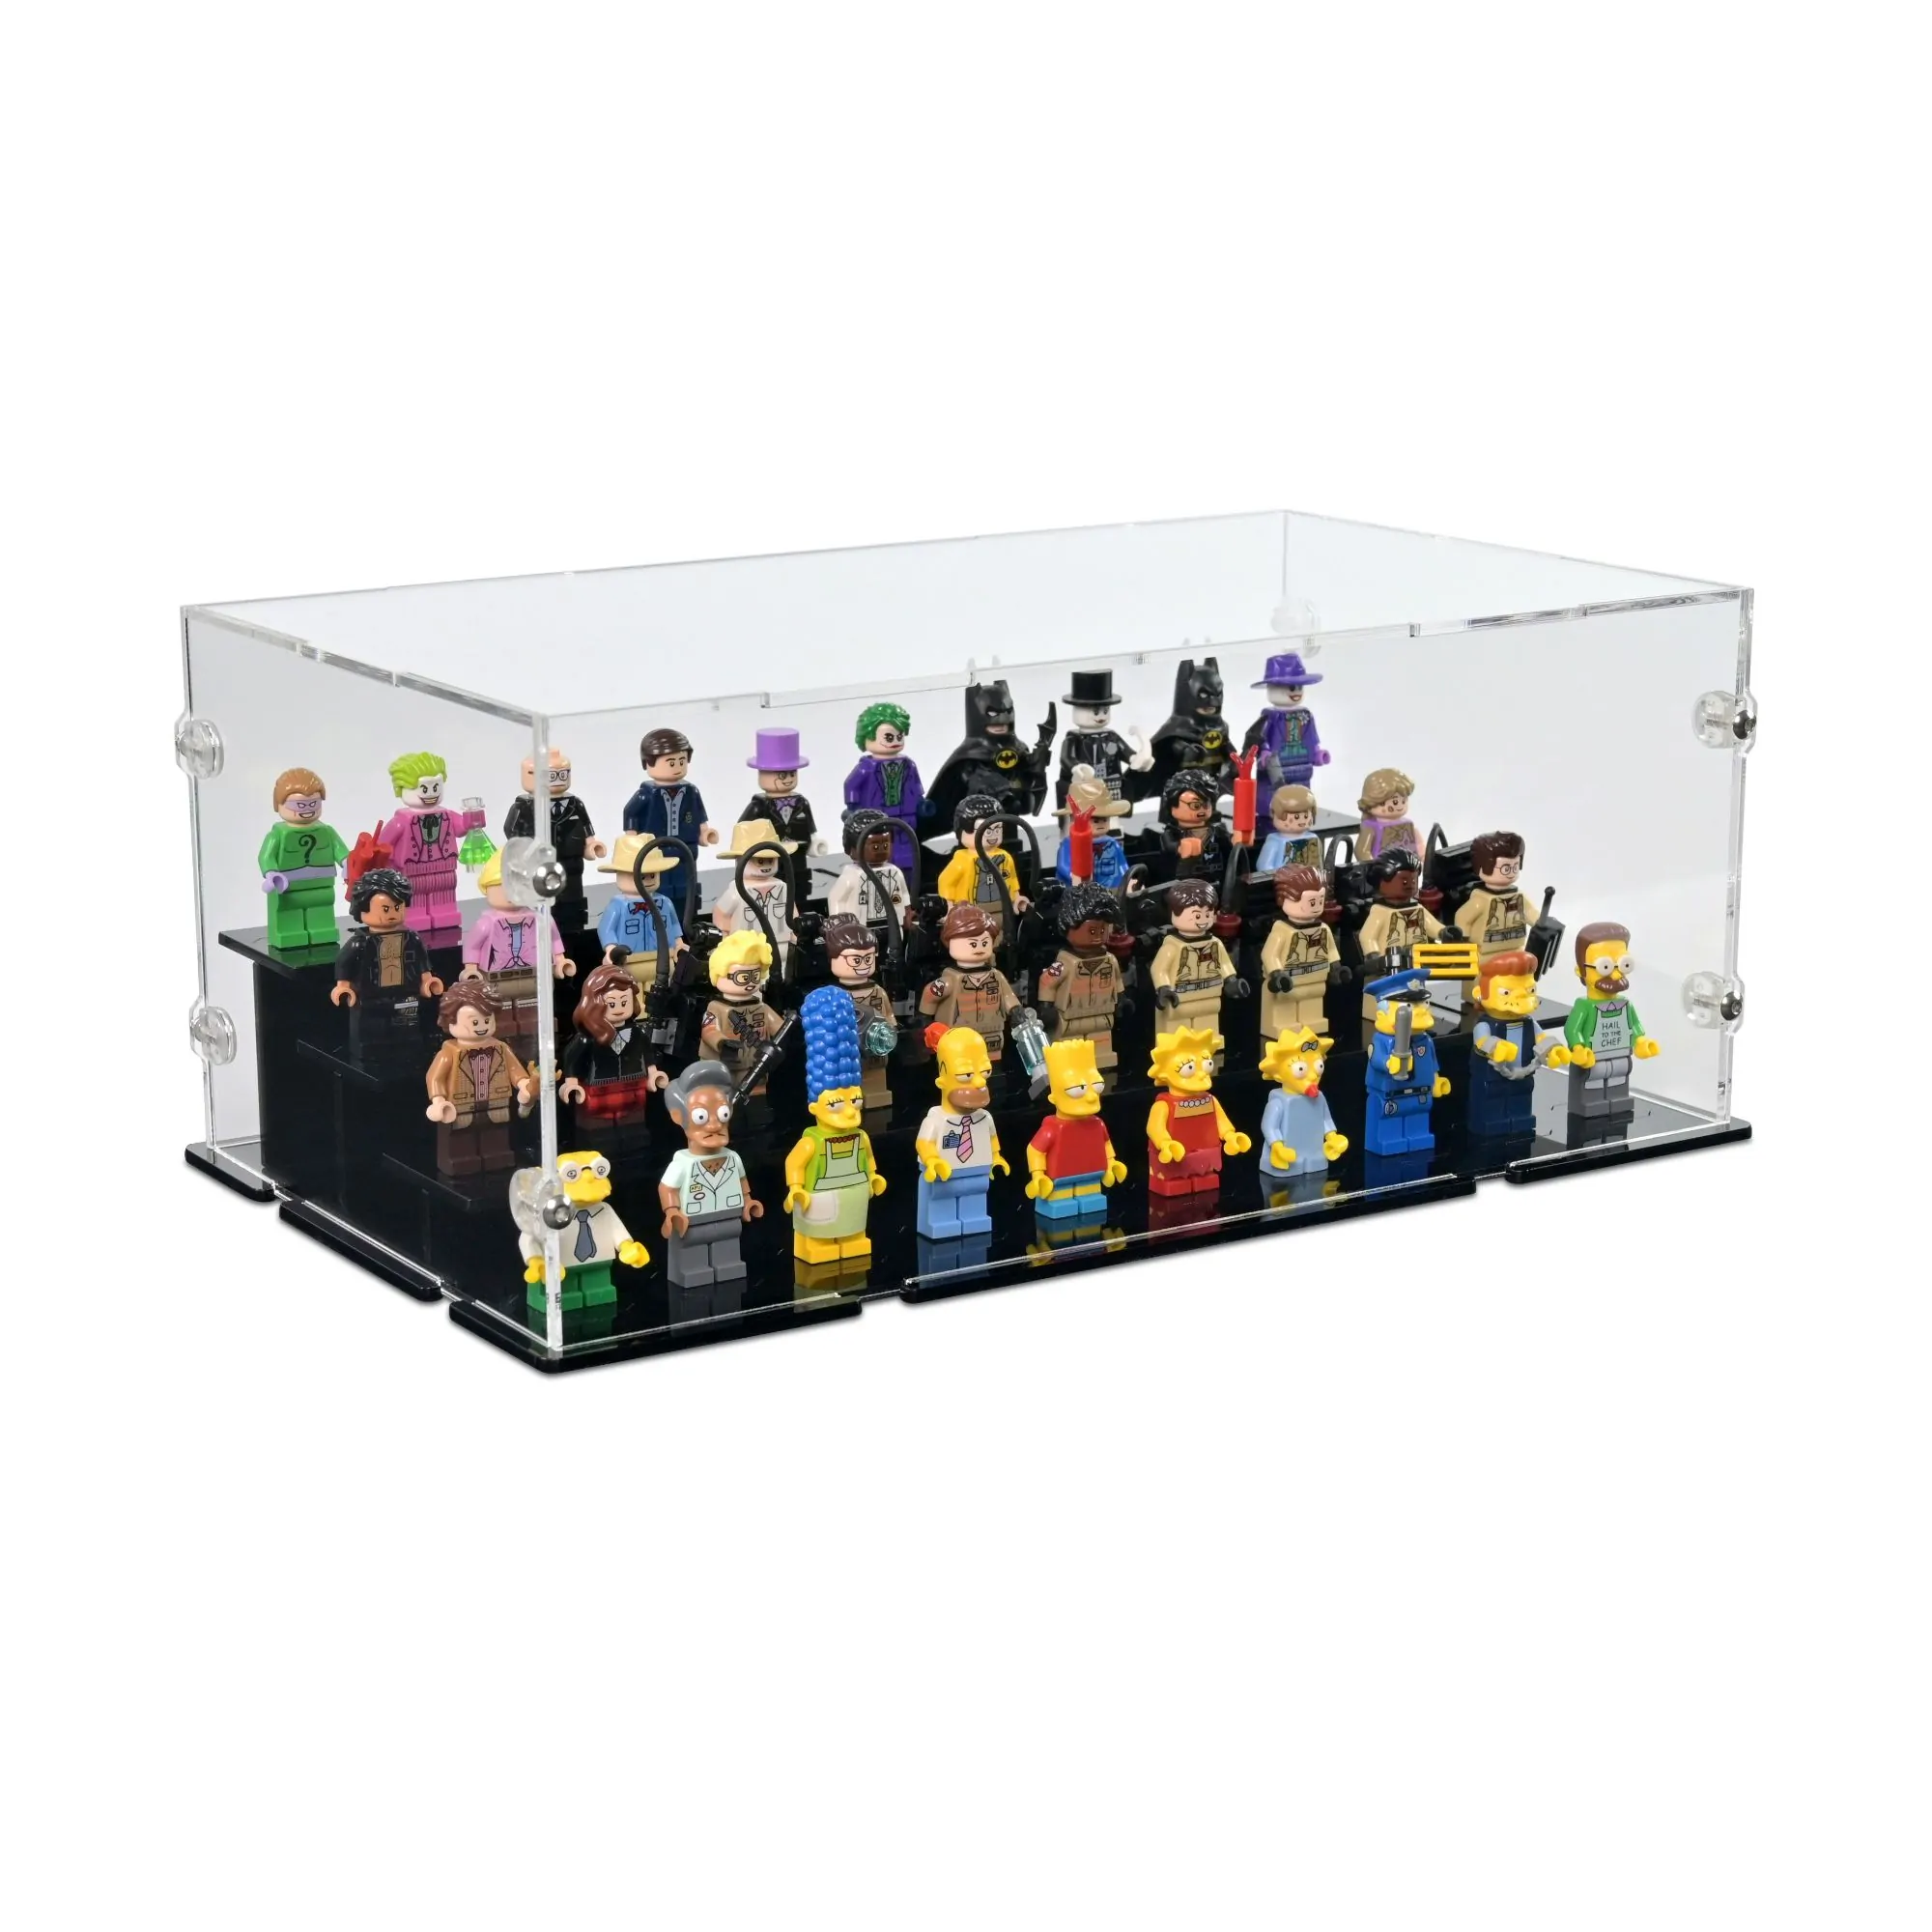 40 LEGO Minifigures Desktop Display Case